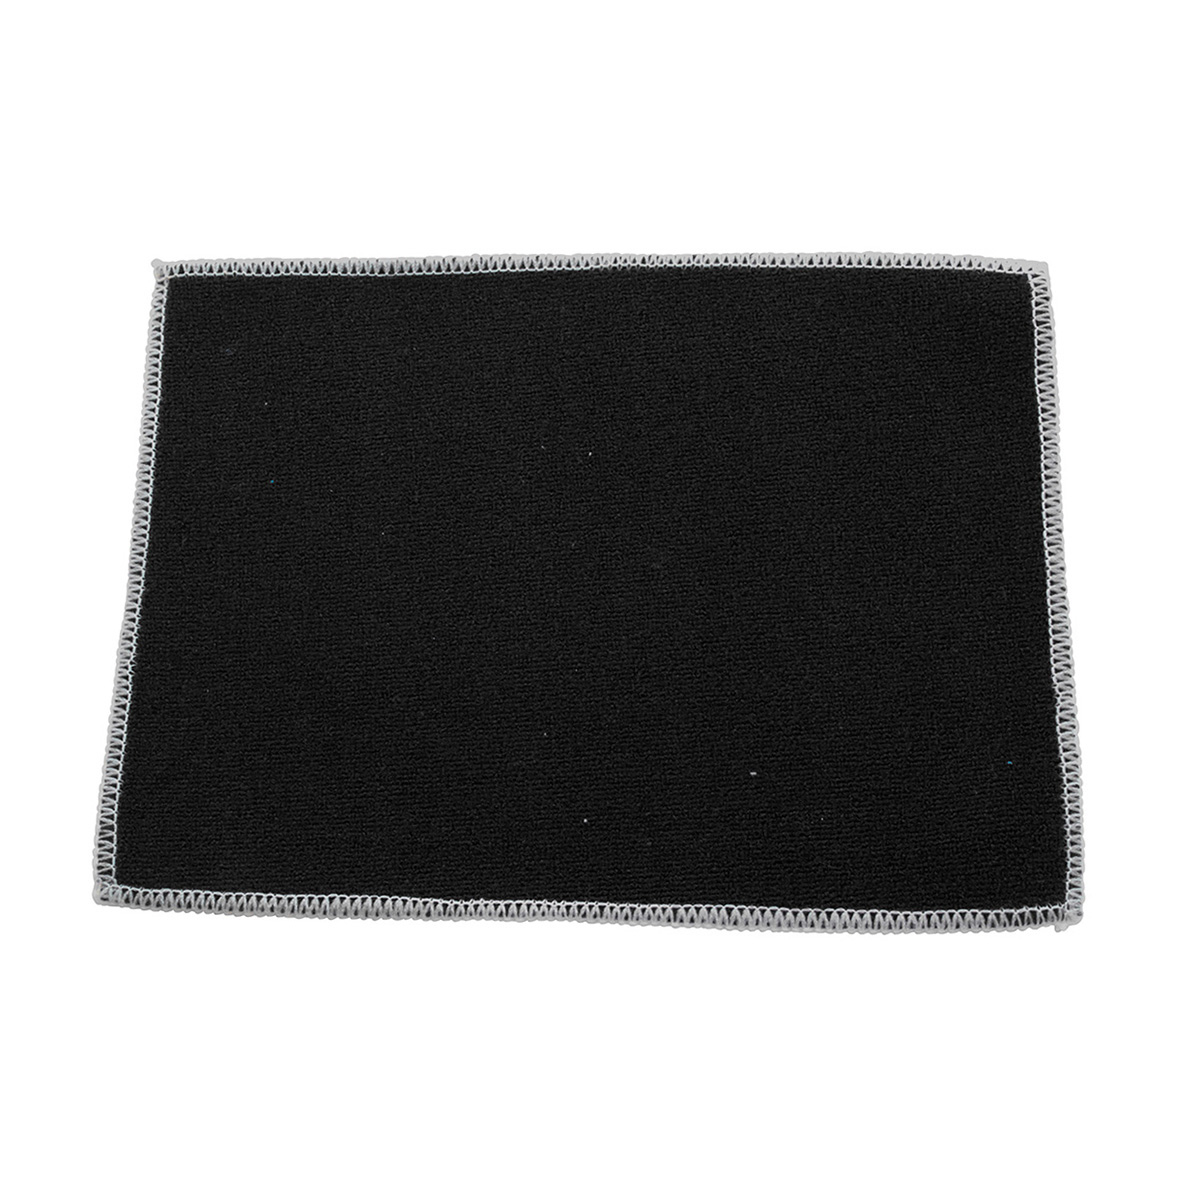 Black Dual Sided Microfiber/Terry Cloth